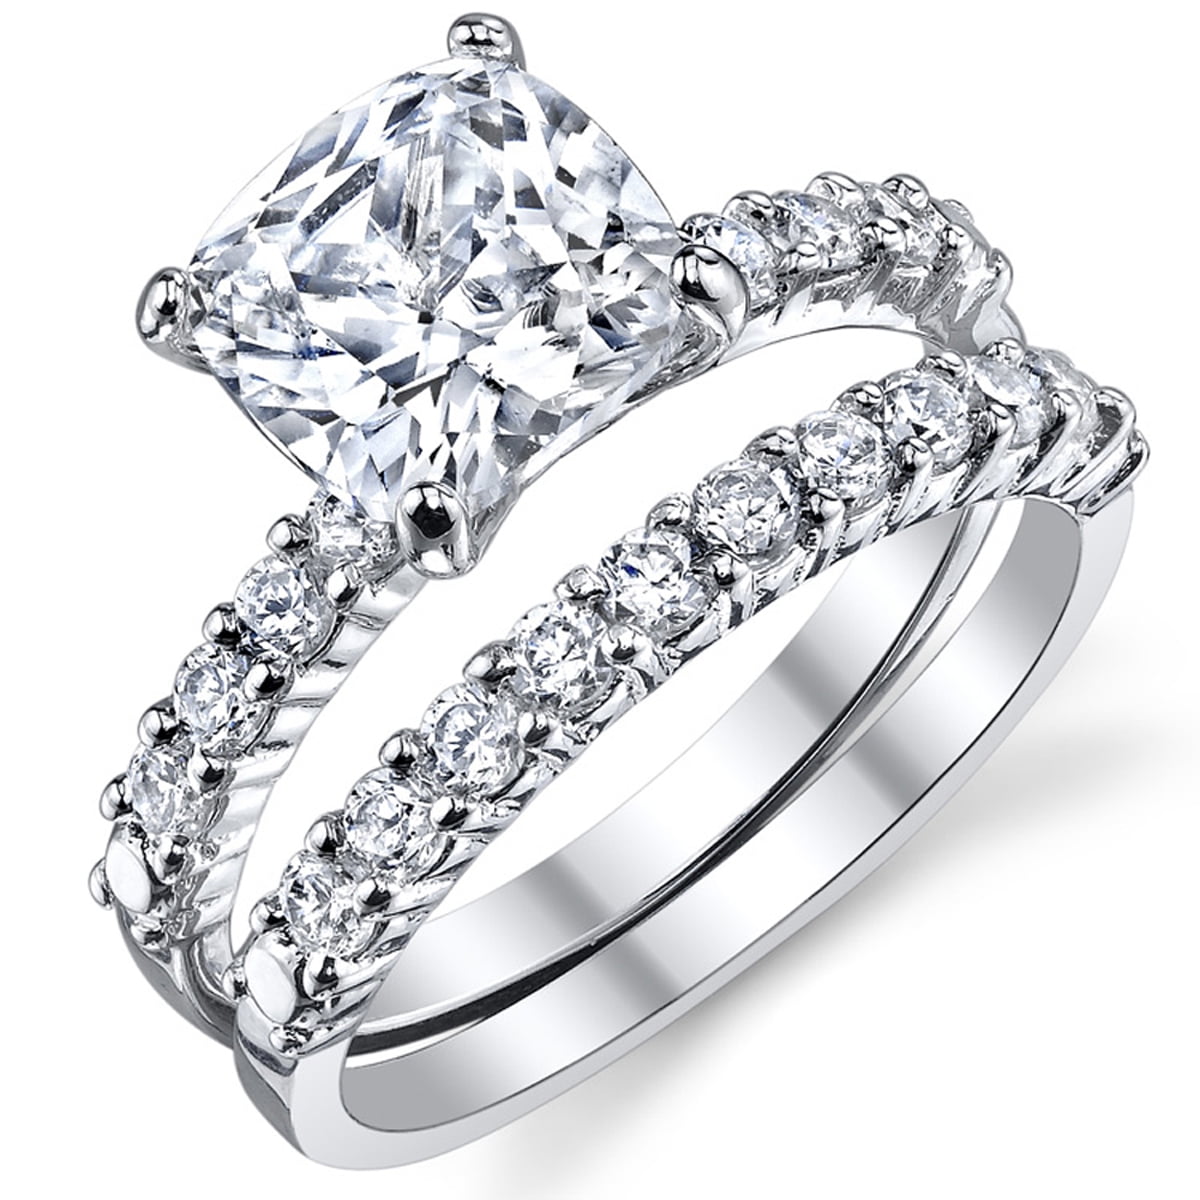 Sterling Silver 925 Bridal CZ Cushion Cut Engagement Ring Wedding Band Set 5-10 